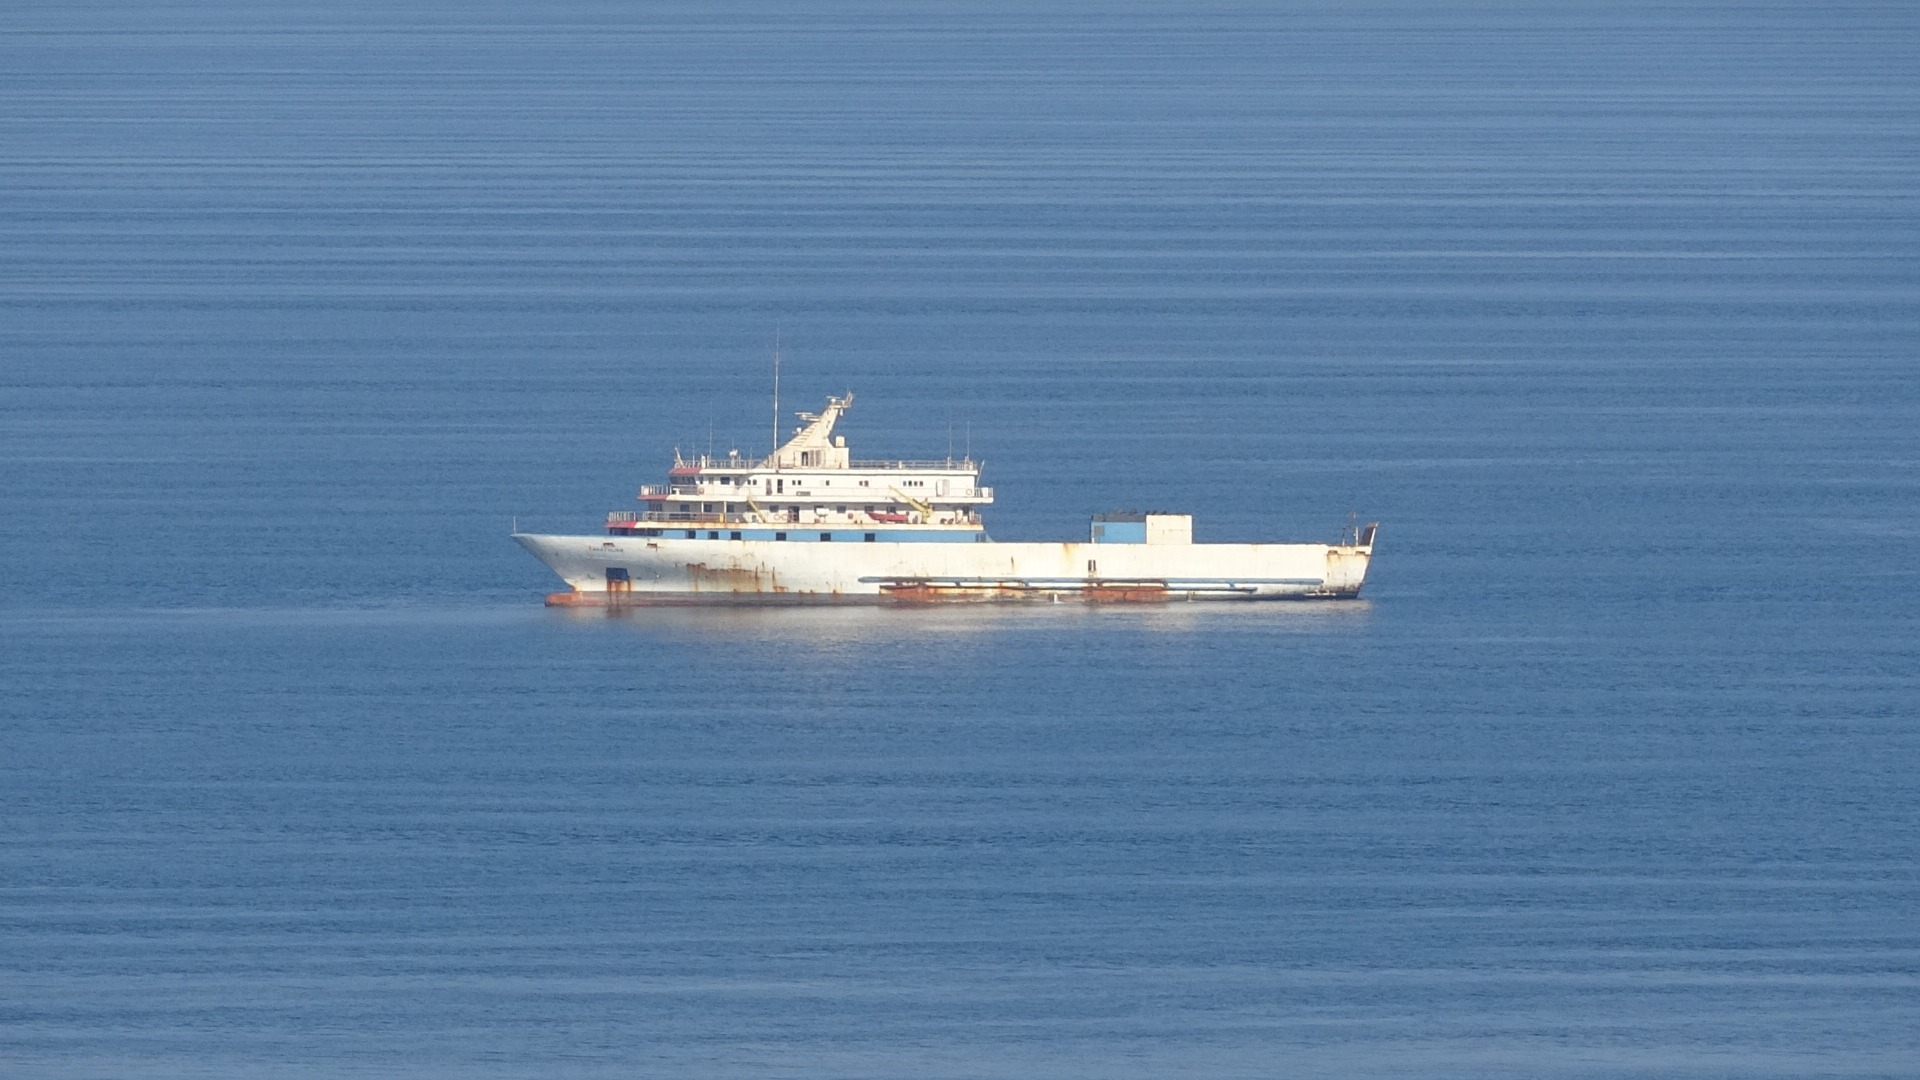 Yunanistan'ın saldırdığı gemi Mavi Marmara çıktı 5